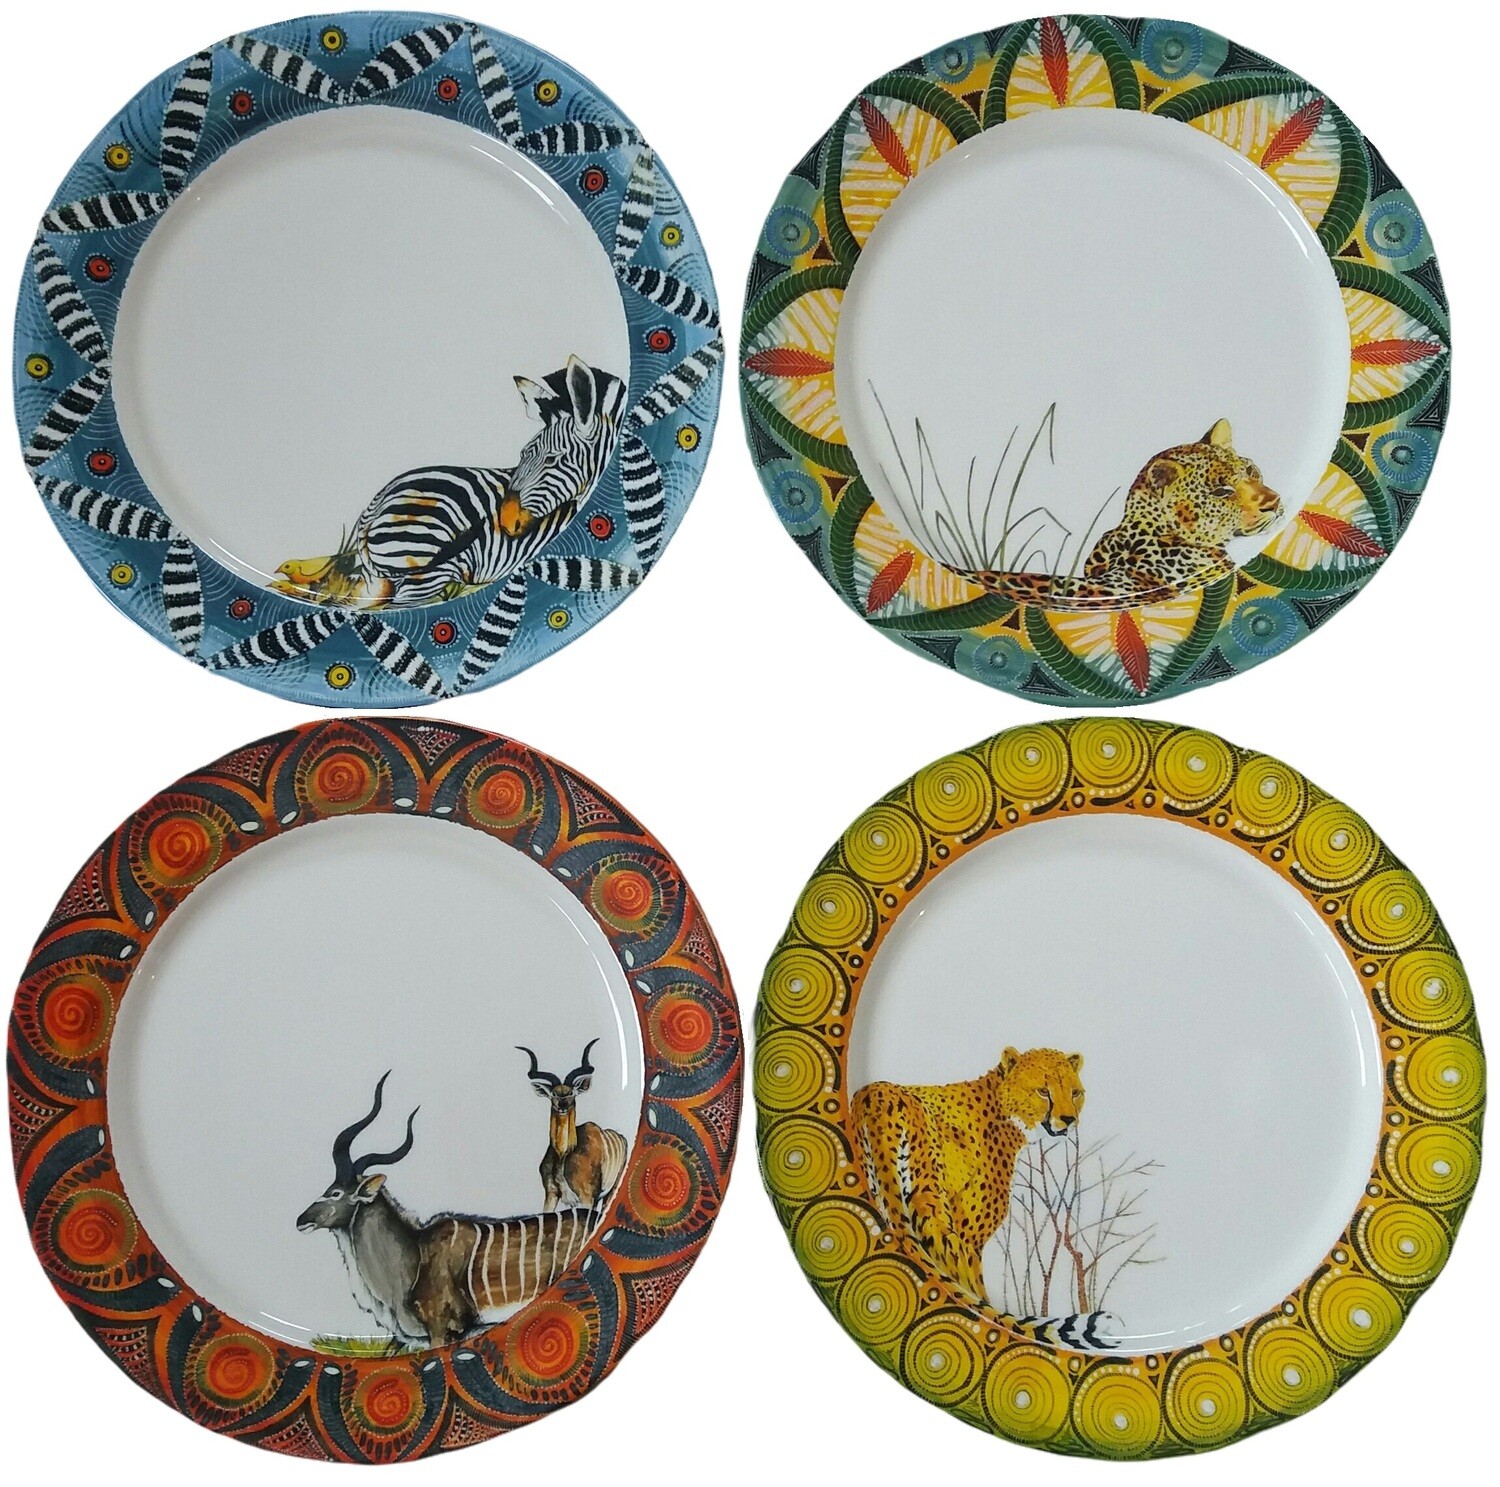 Set of 4 Dinner Plates
Kudu,Zebra,Cheetah,Leopard
FREE SHIPPING